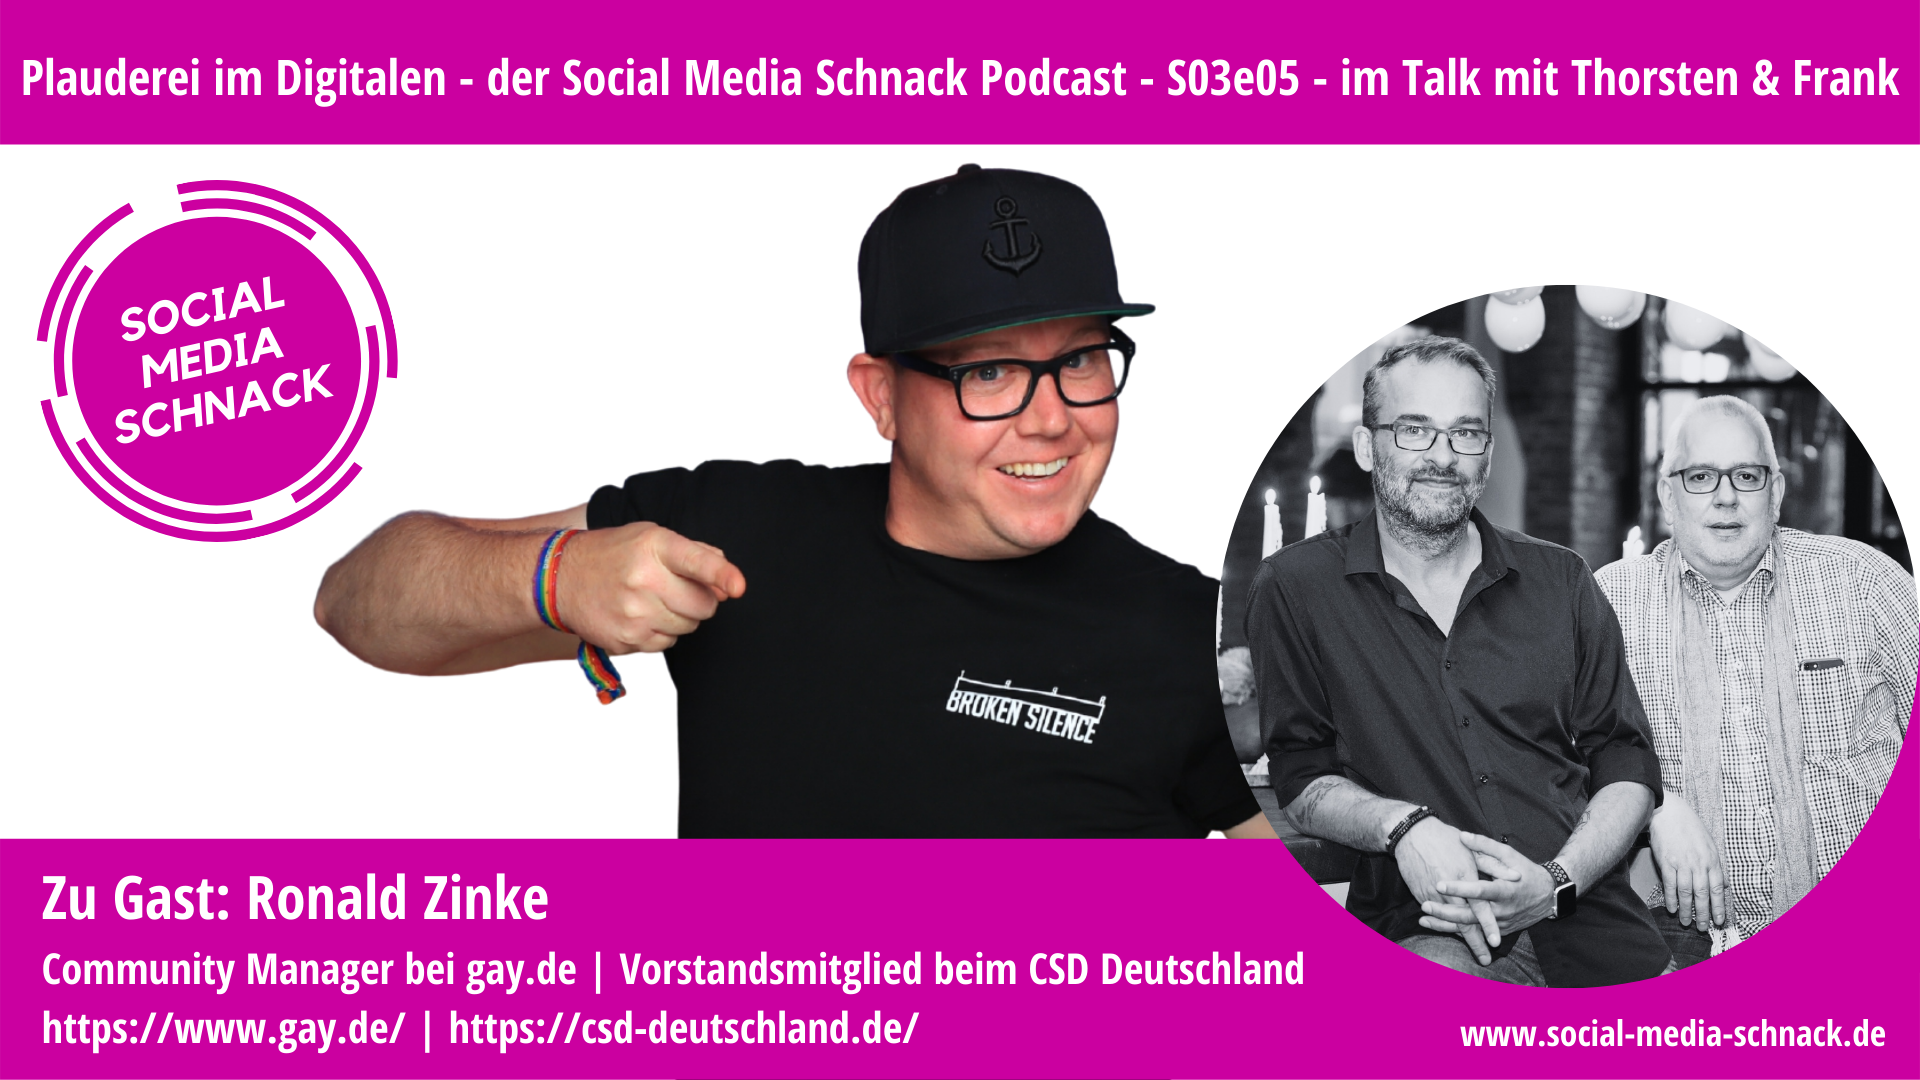 Social Media Schnack – S03e05 – Zu Gast: Ronald Zinke, gay.de & CSD Deutschland e.V.